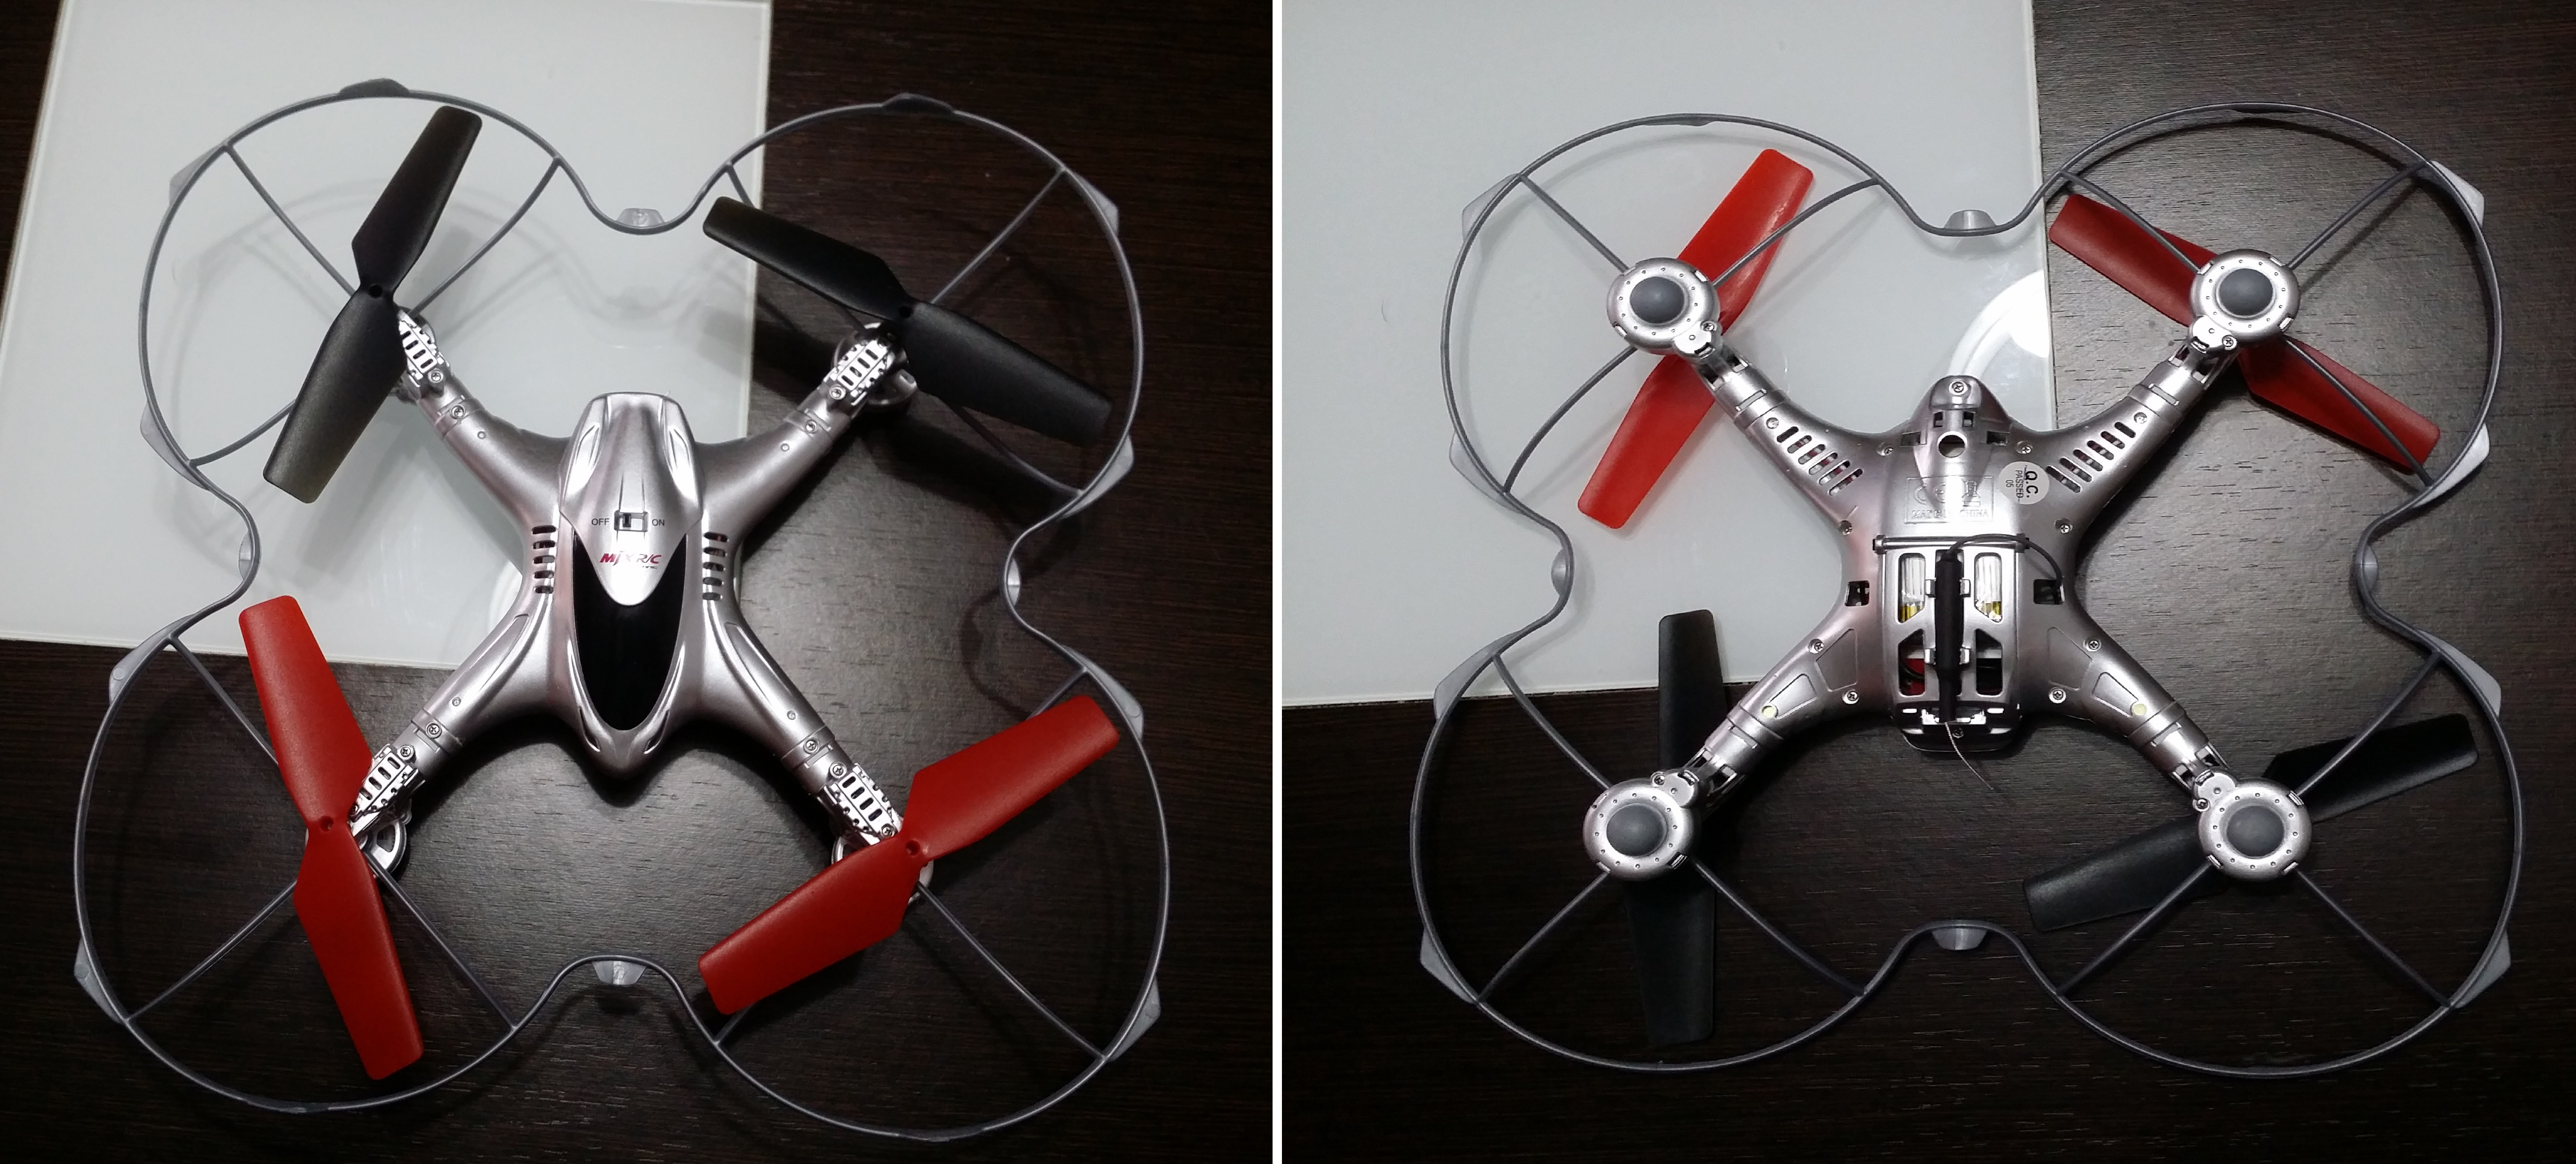 MJX un drone muy completo a un precio asequible.